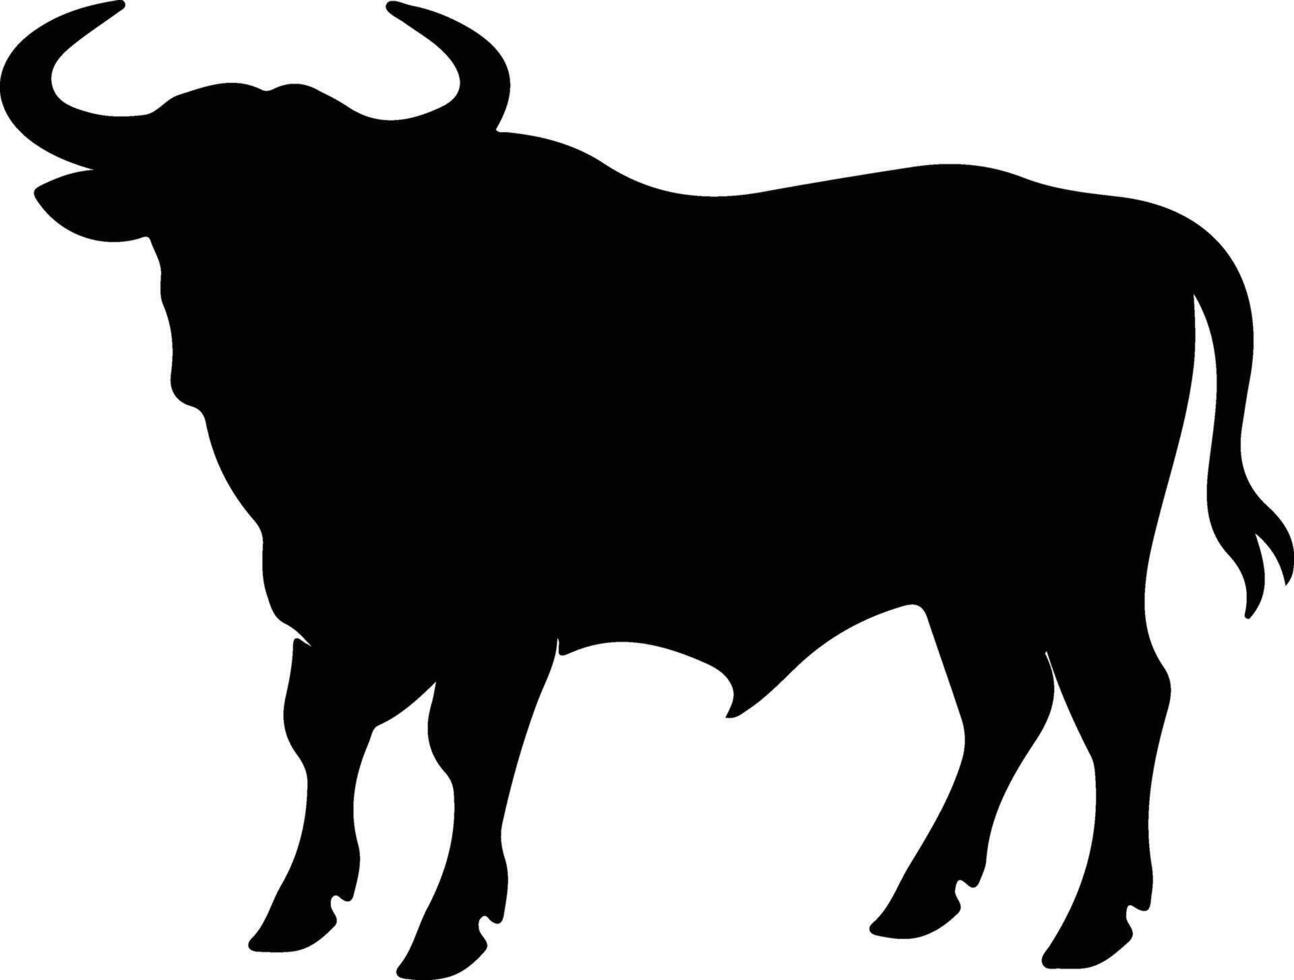 ox black silhouette vector